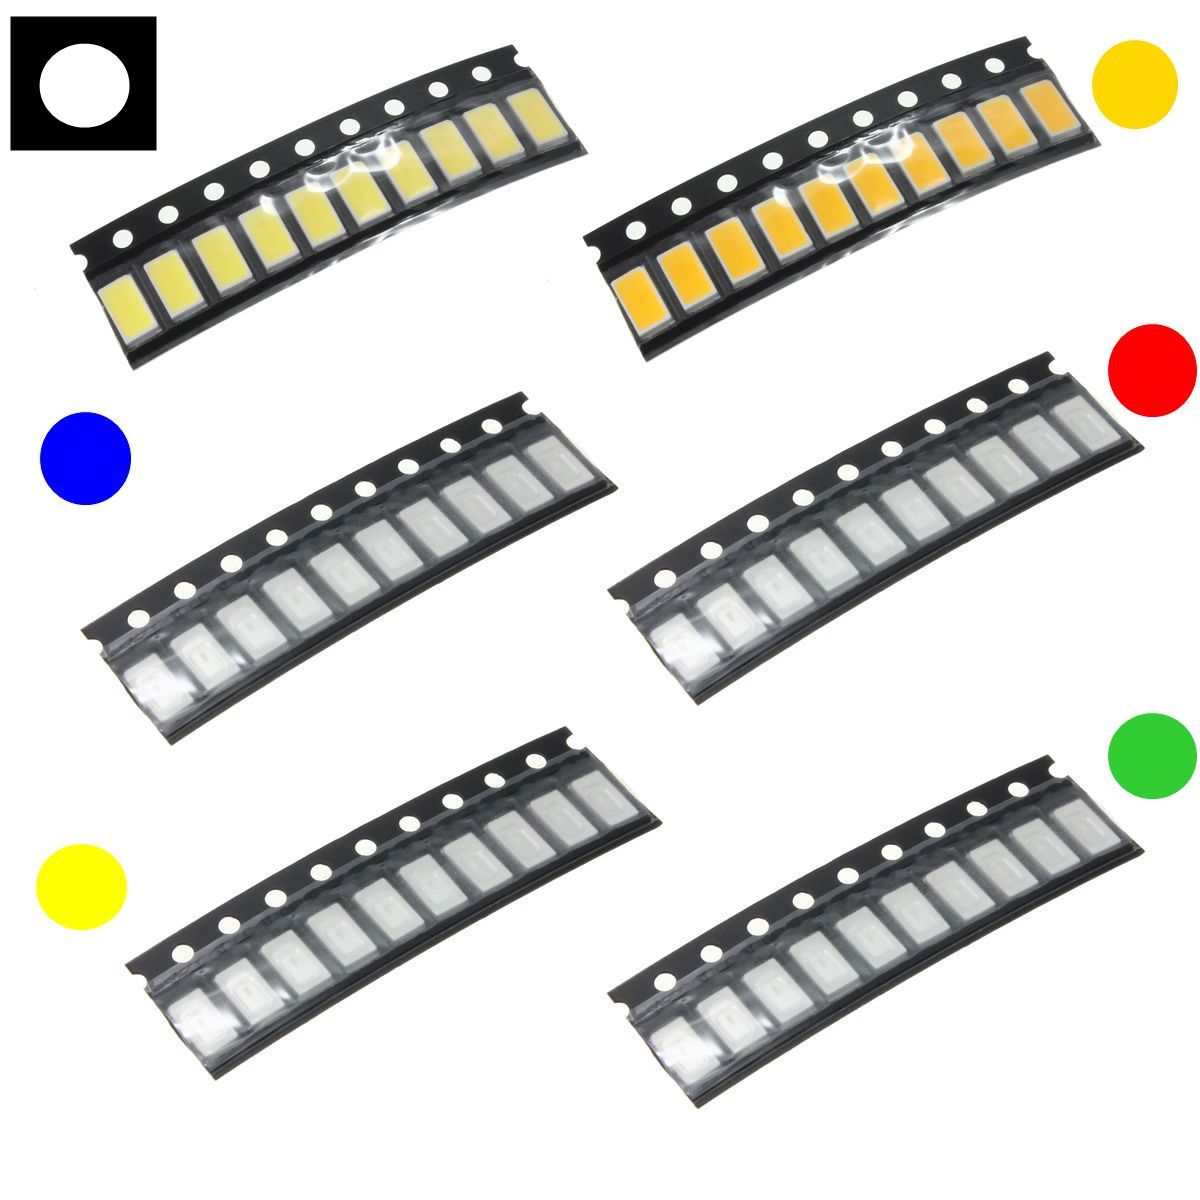 10-pcs-5630-Colorful-SMD-SMT-LED-Light-Lamp-Beads-For-Strip-Lights-979304